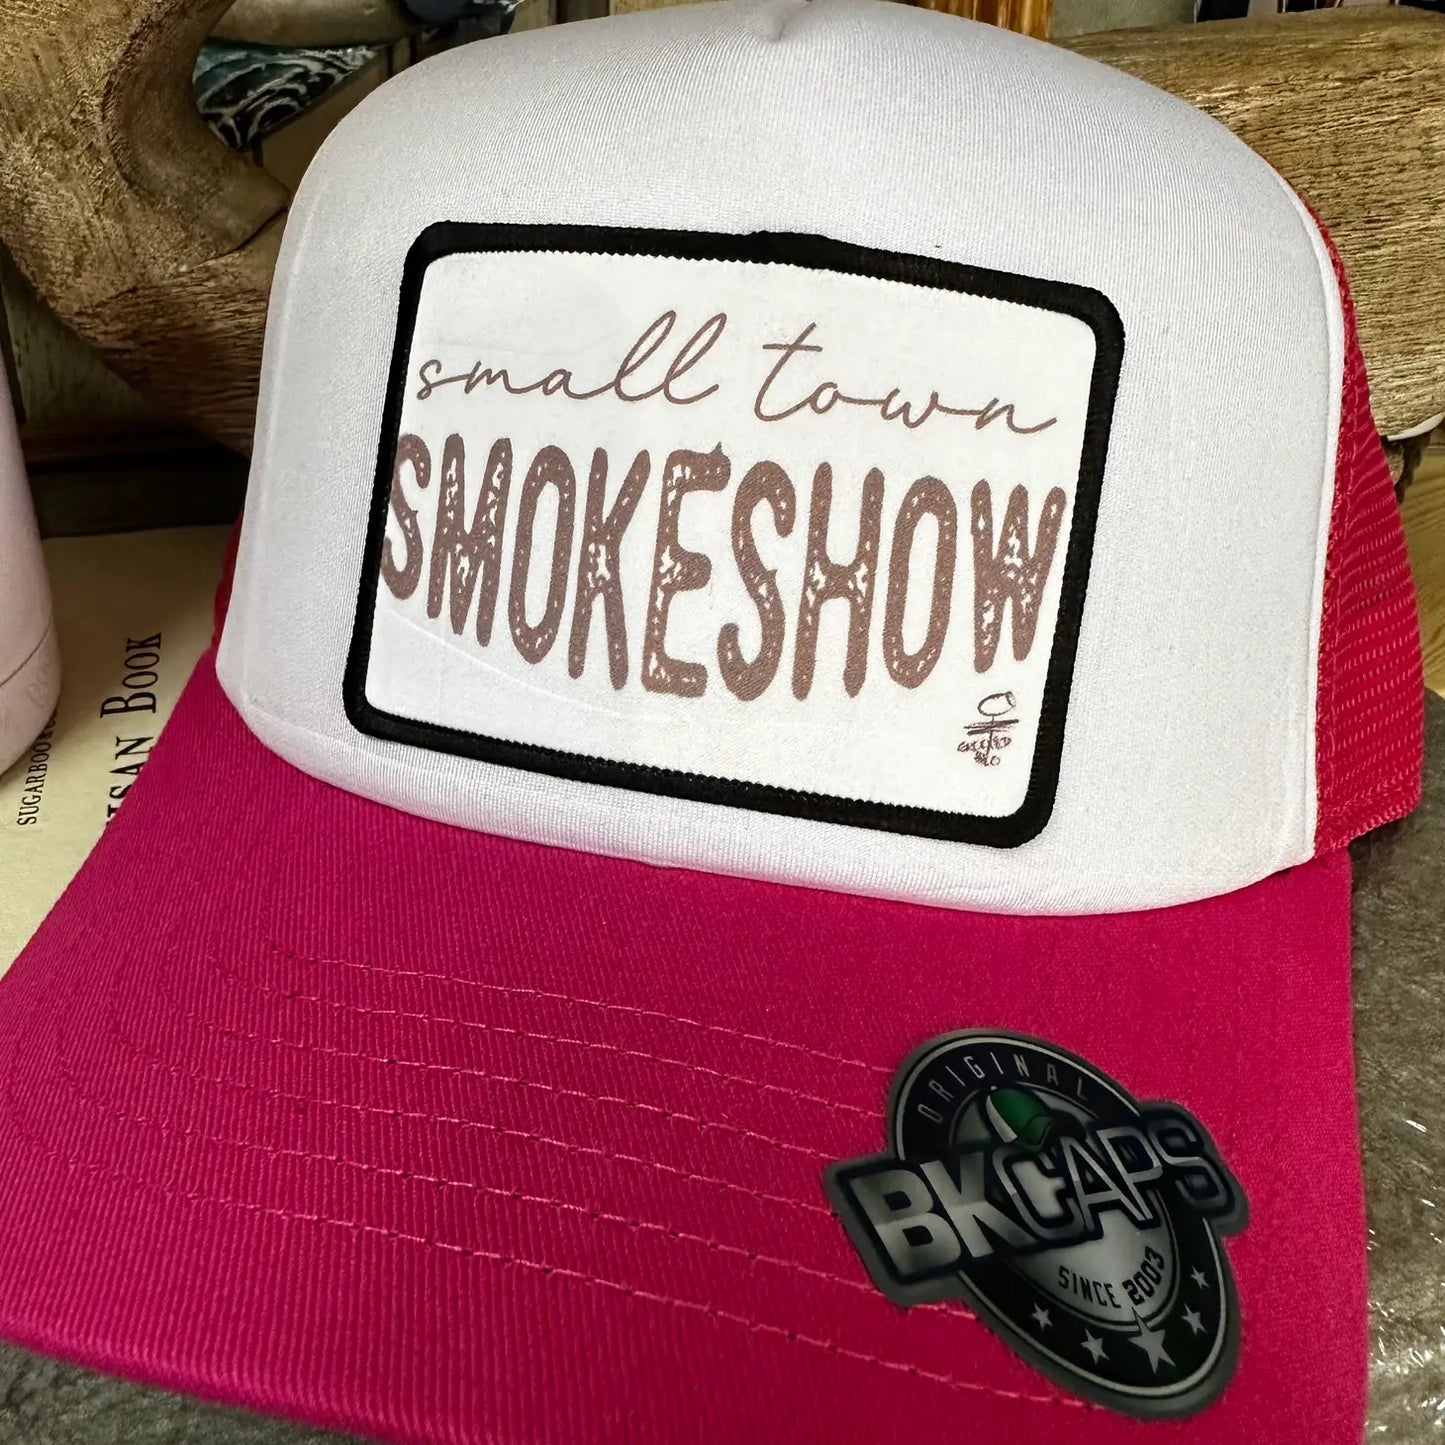 Small Town Smoke Show Trucker Hat